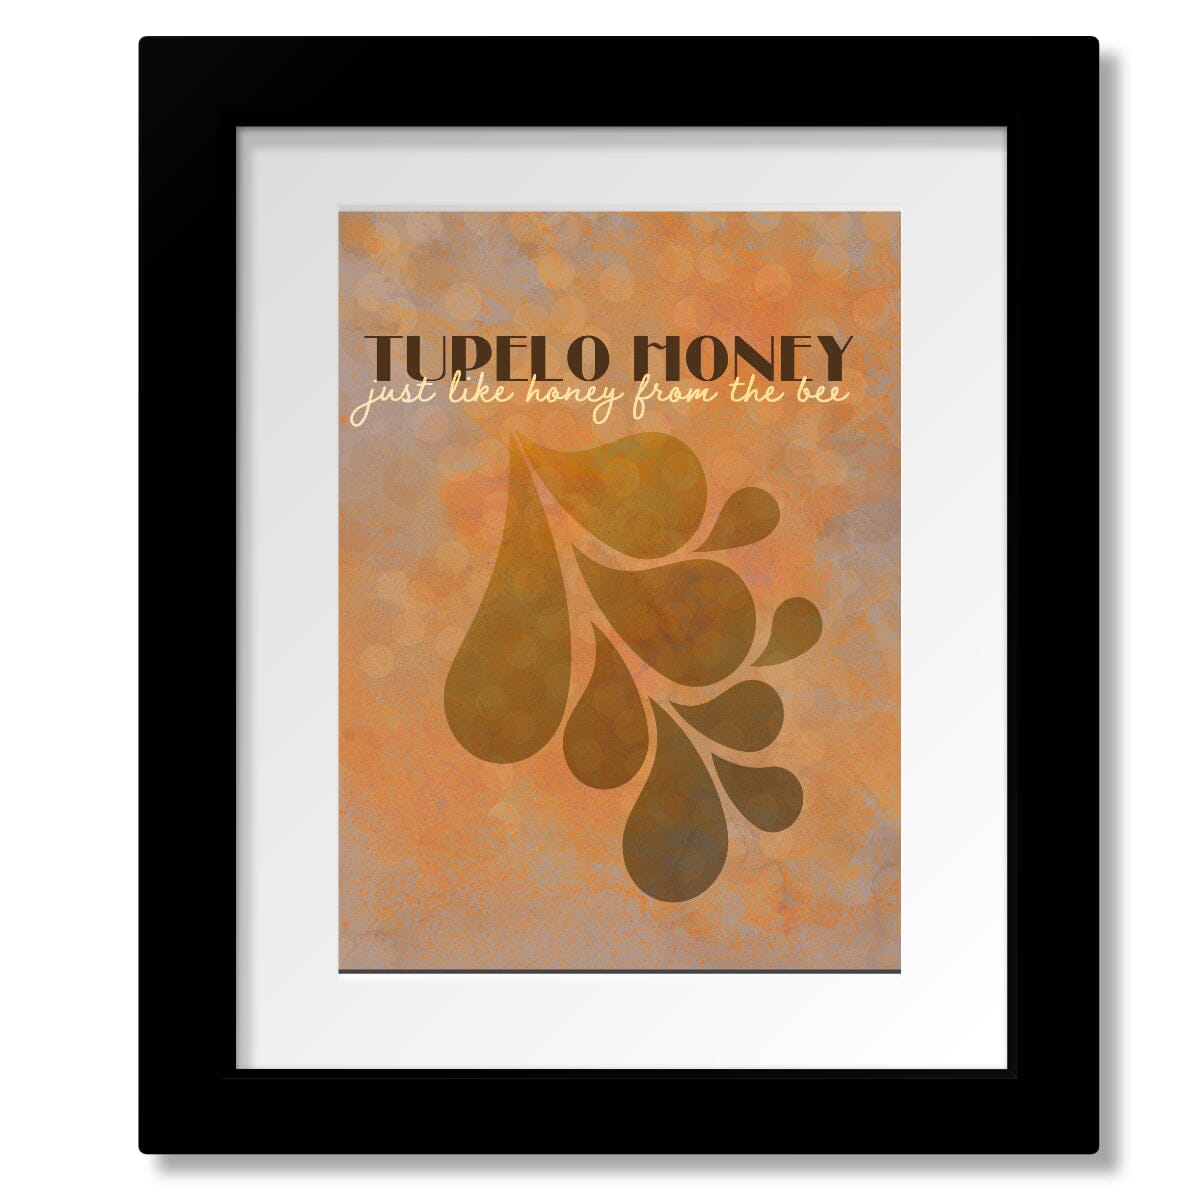 Tupelo Honey by Van Morrison - Rock Music Song Lyric Art Song Lyrics Art Song Lyrics Art 8x10 Matted and Framed Print 